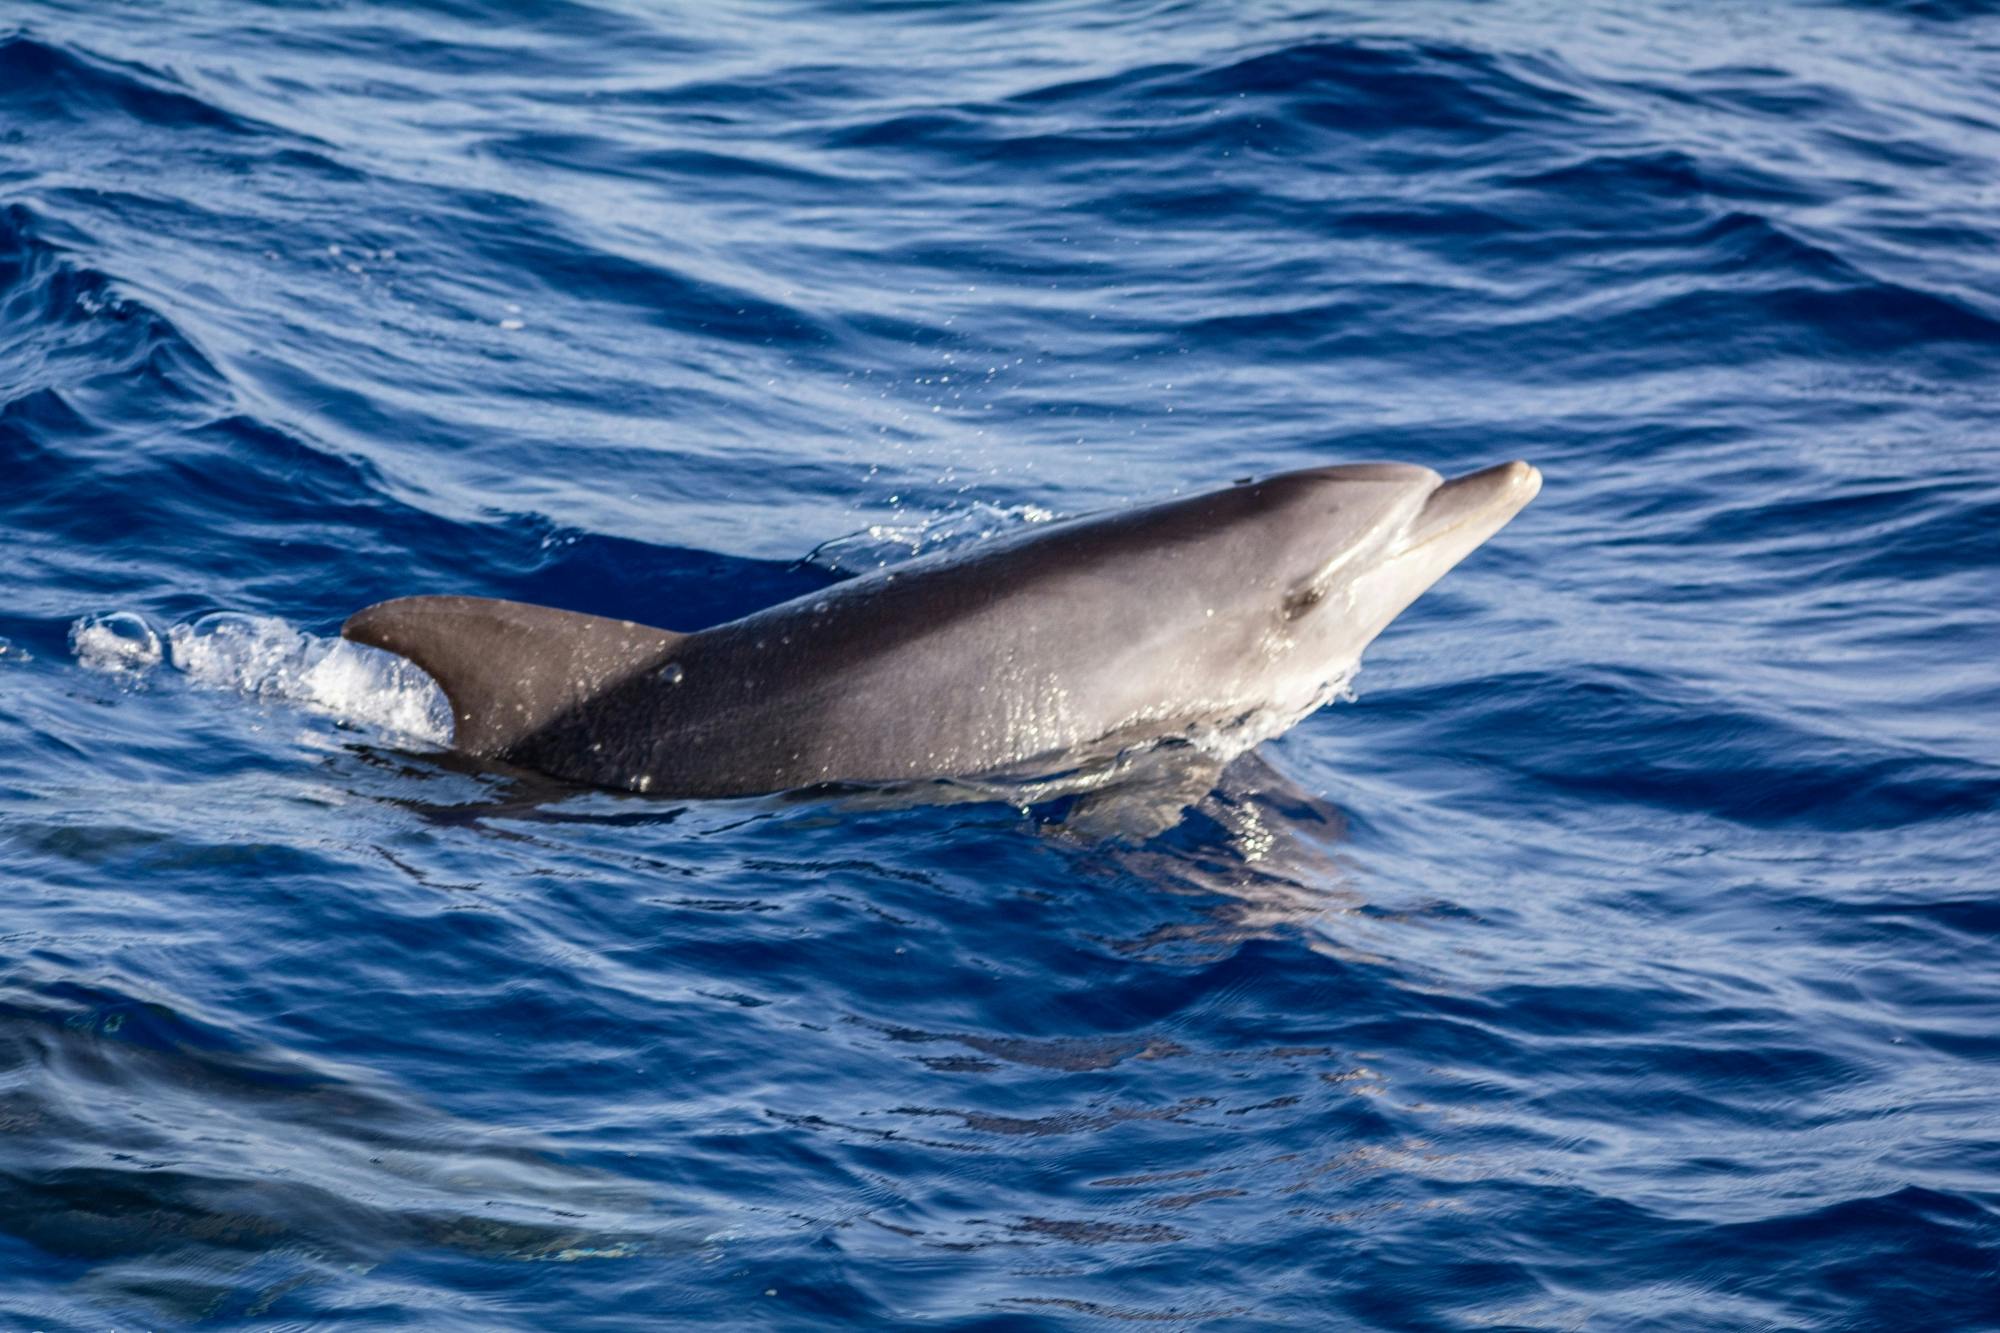 Lanzarote Sunset Dolphin Spotting Catamaran Cruise